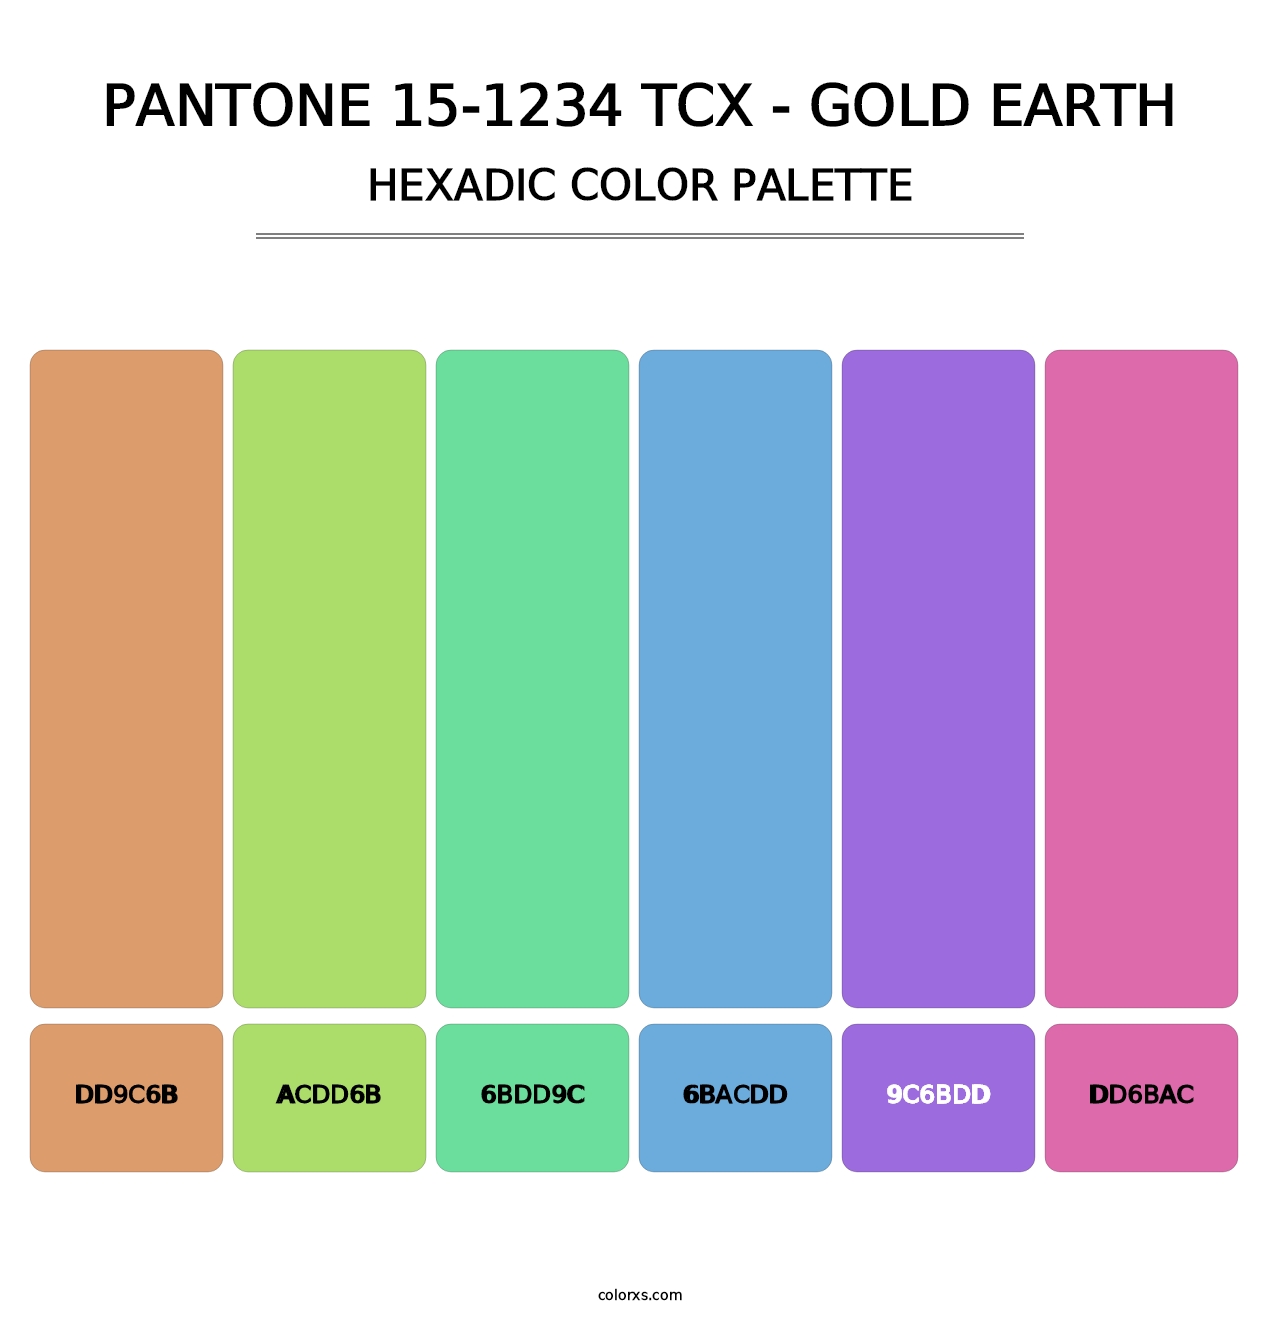 PANTONE 15-1234 TCX - Gold Earth - Hexadic Color Palette